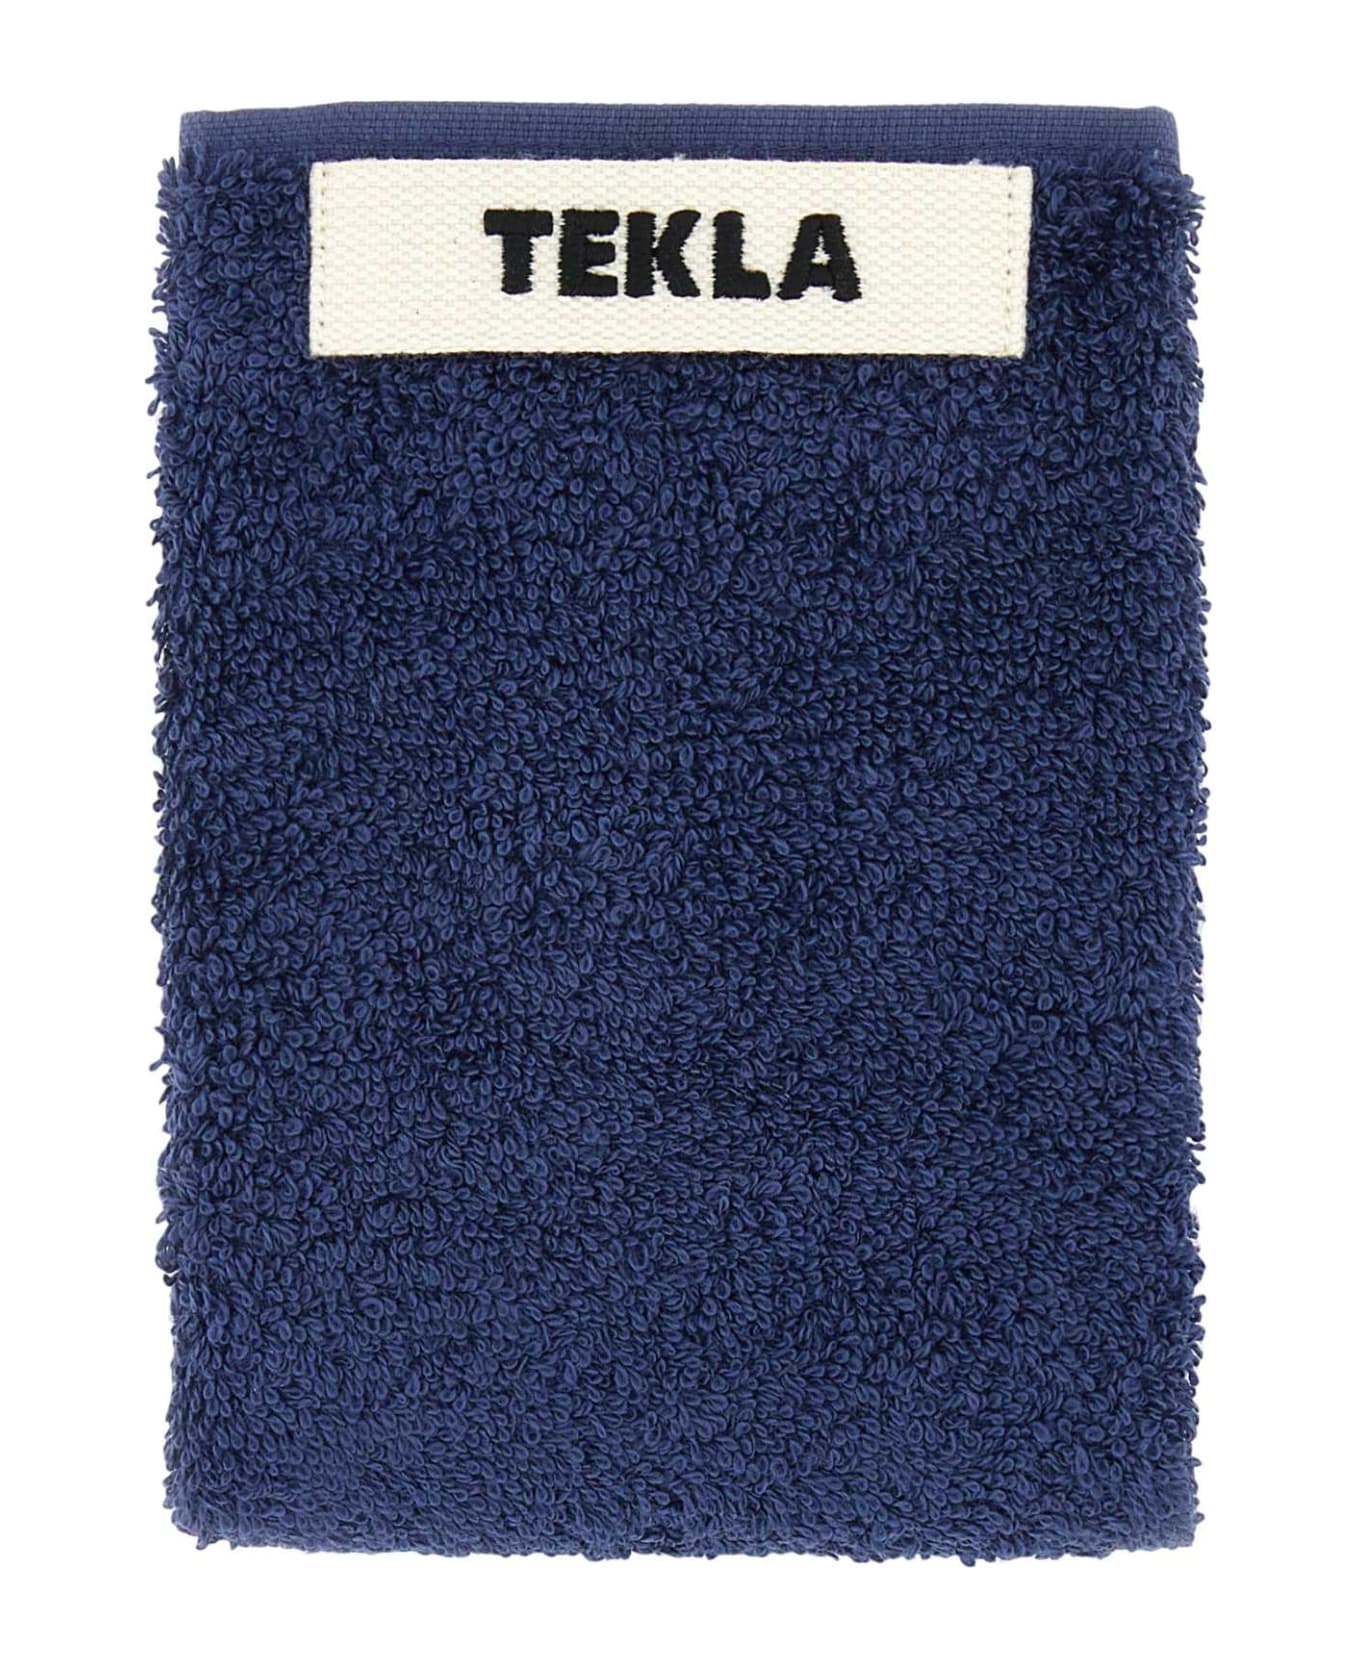 Tekla Air Force Blue Terry Towel - NAVY タオル